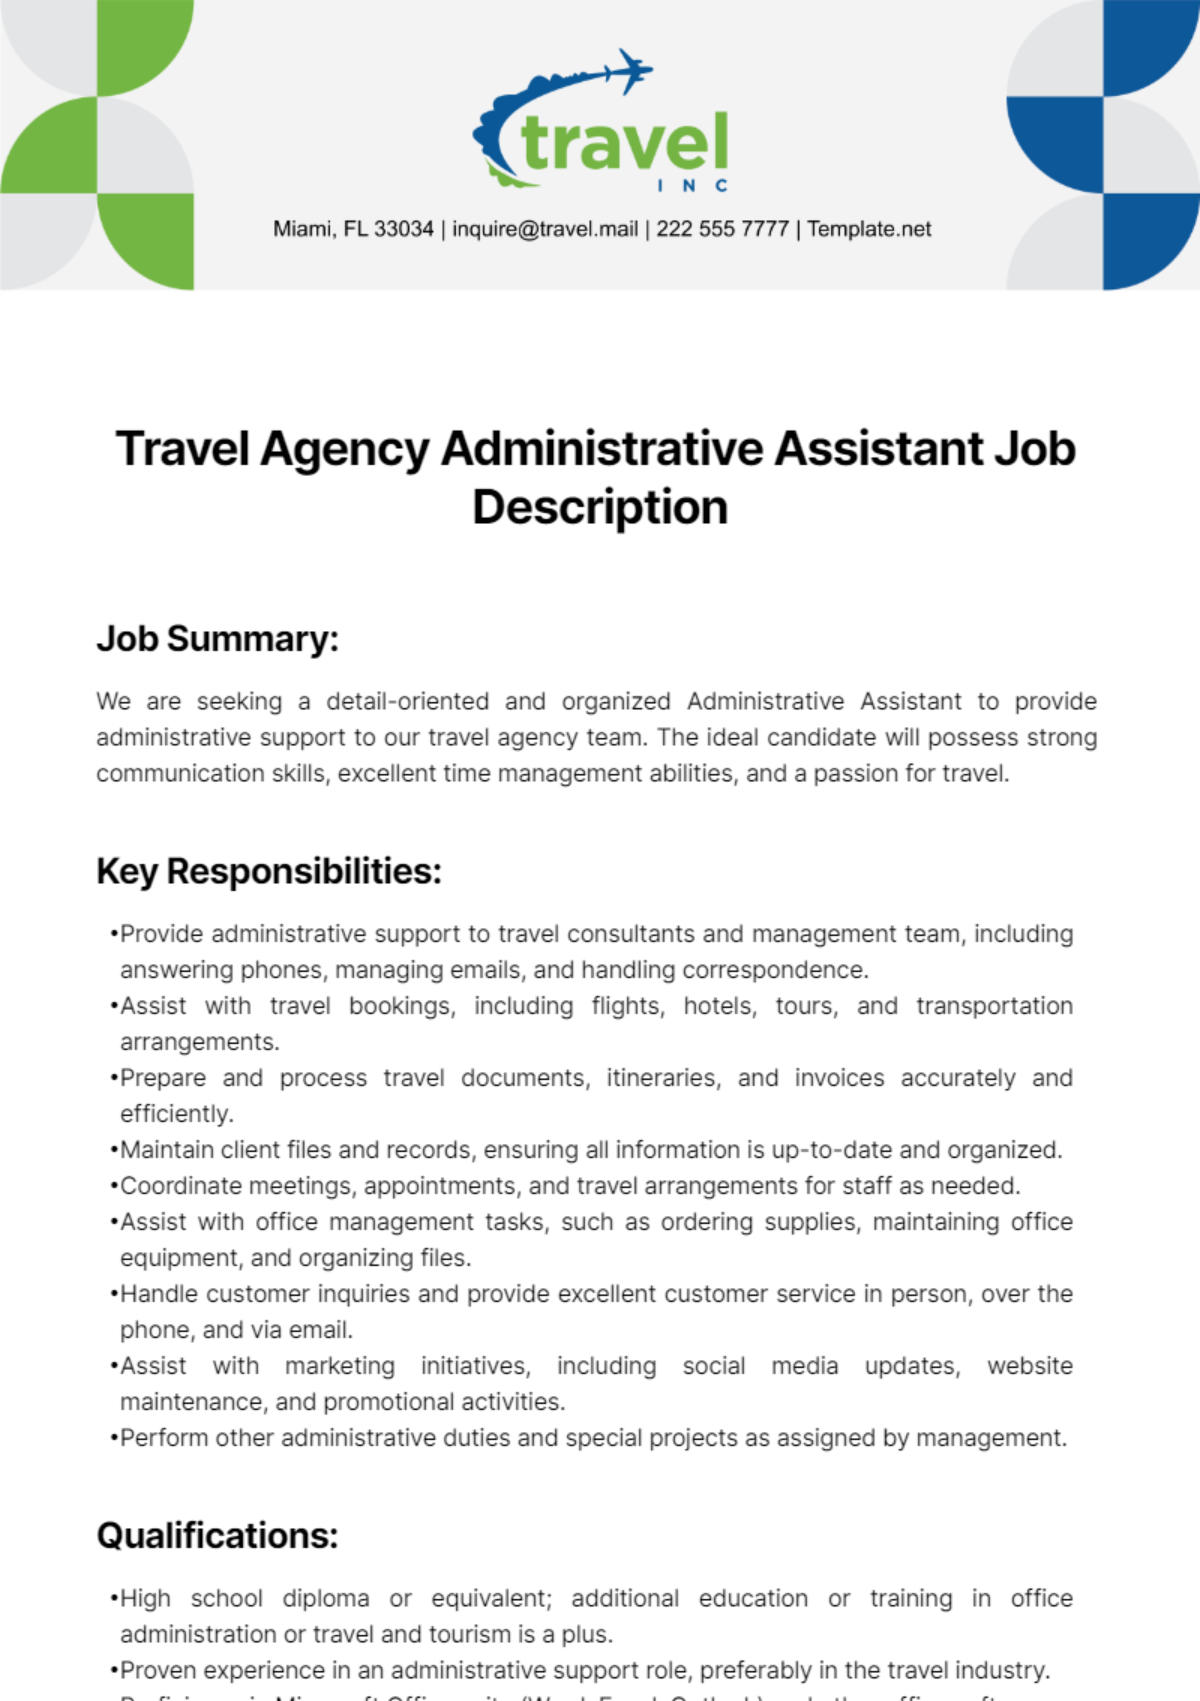 Travel Agency Administrative Assistant Job Description Template